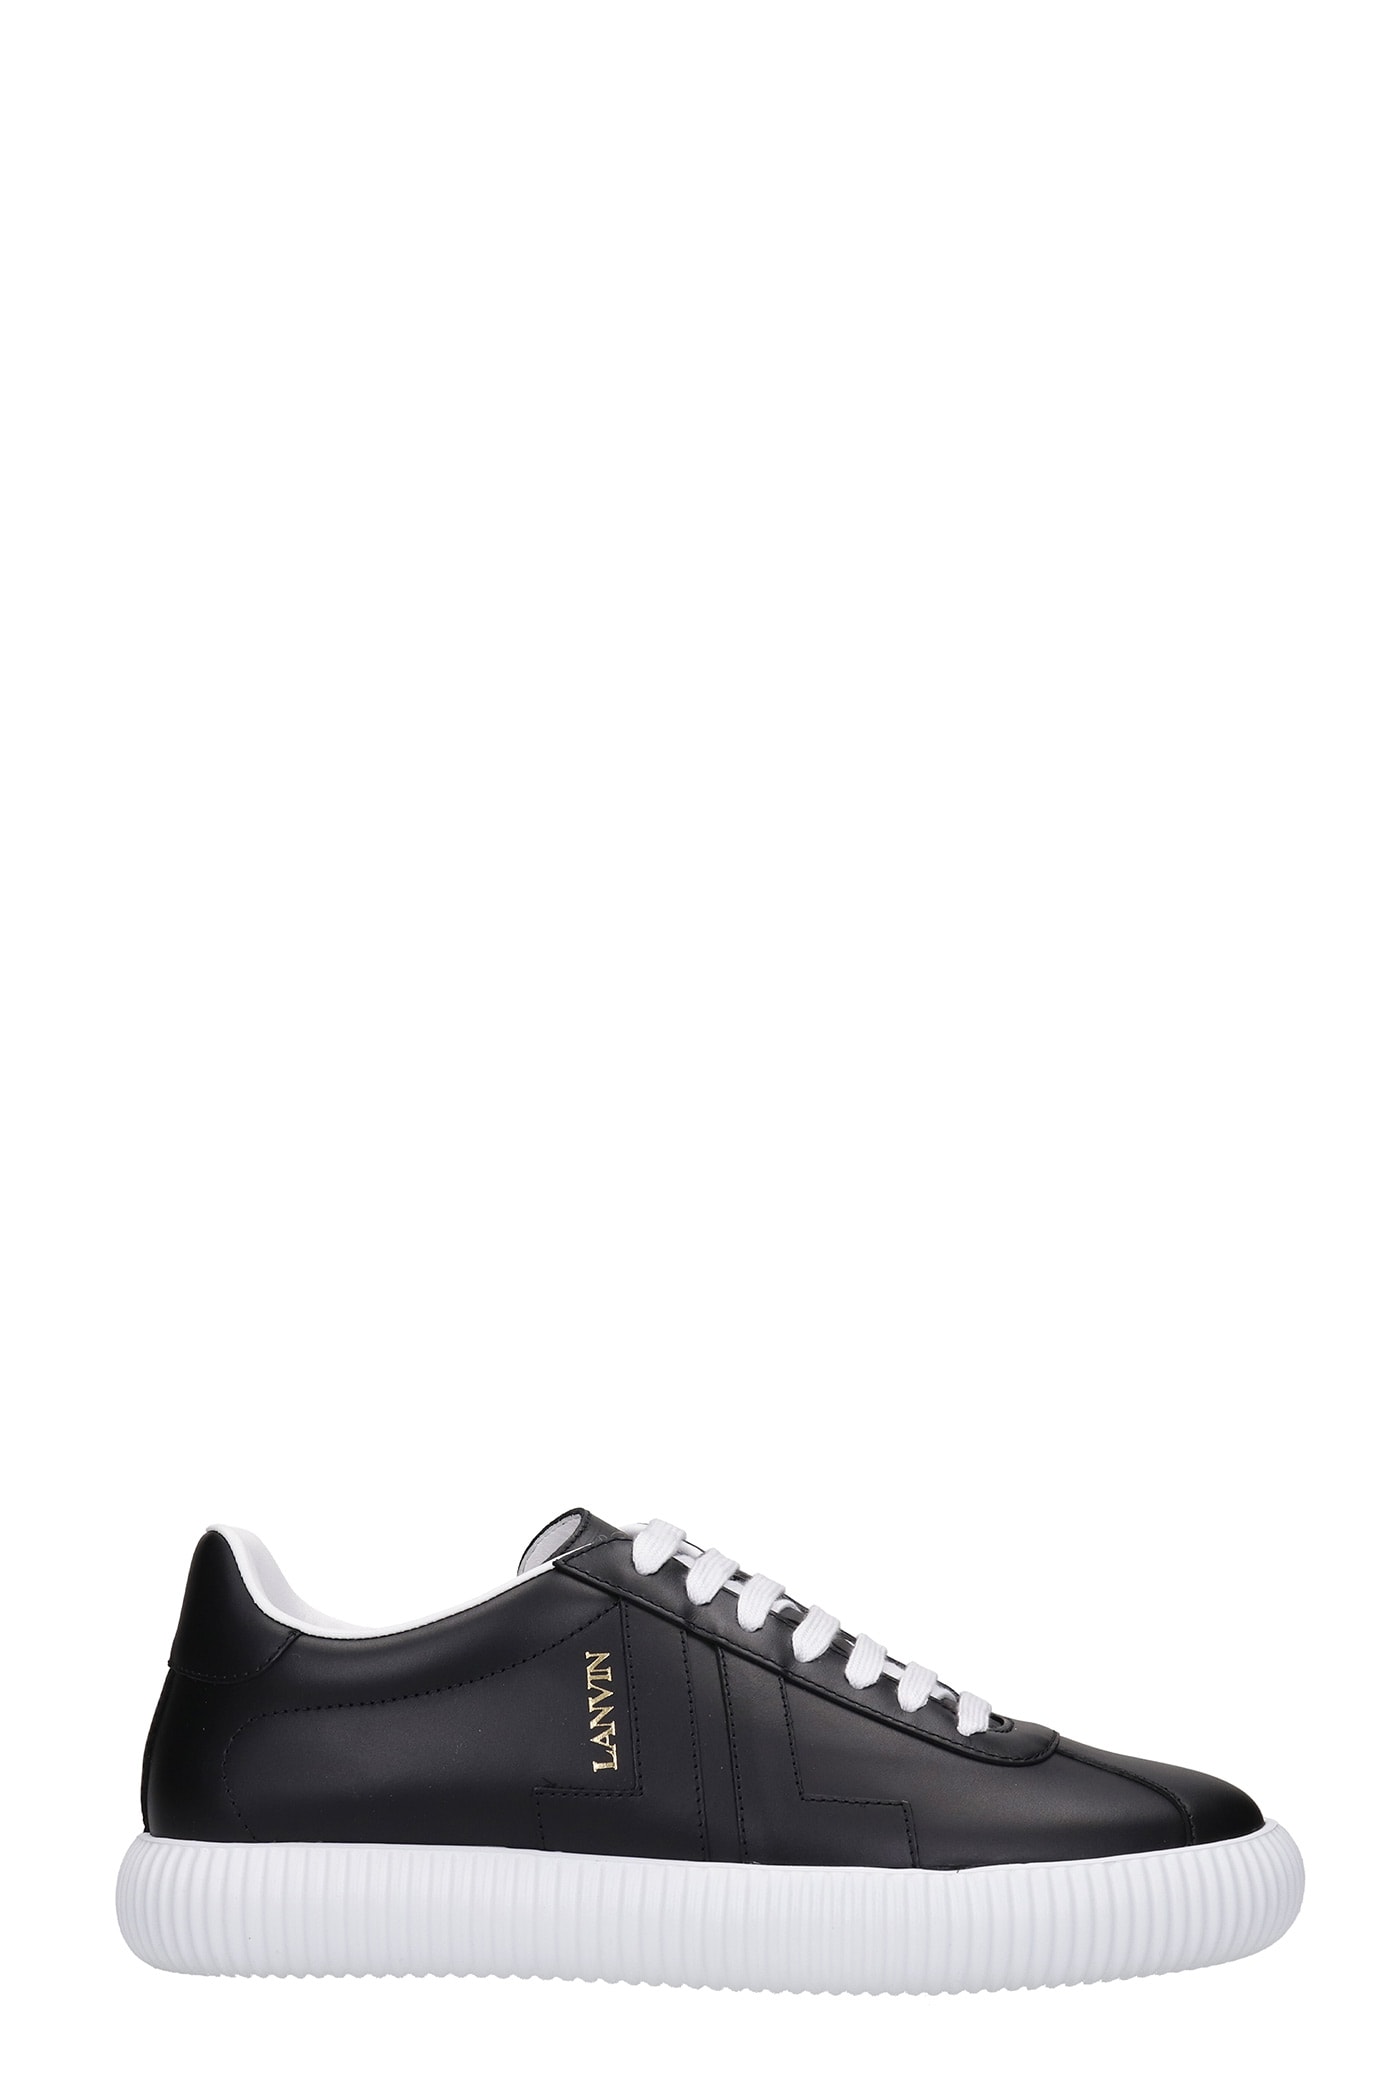 Lanvin Sneakers In Black Leather